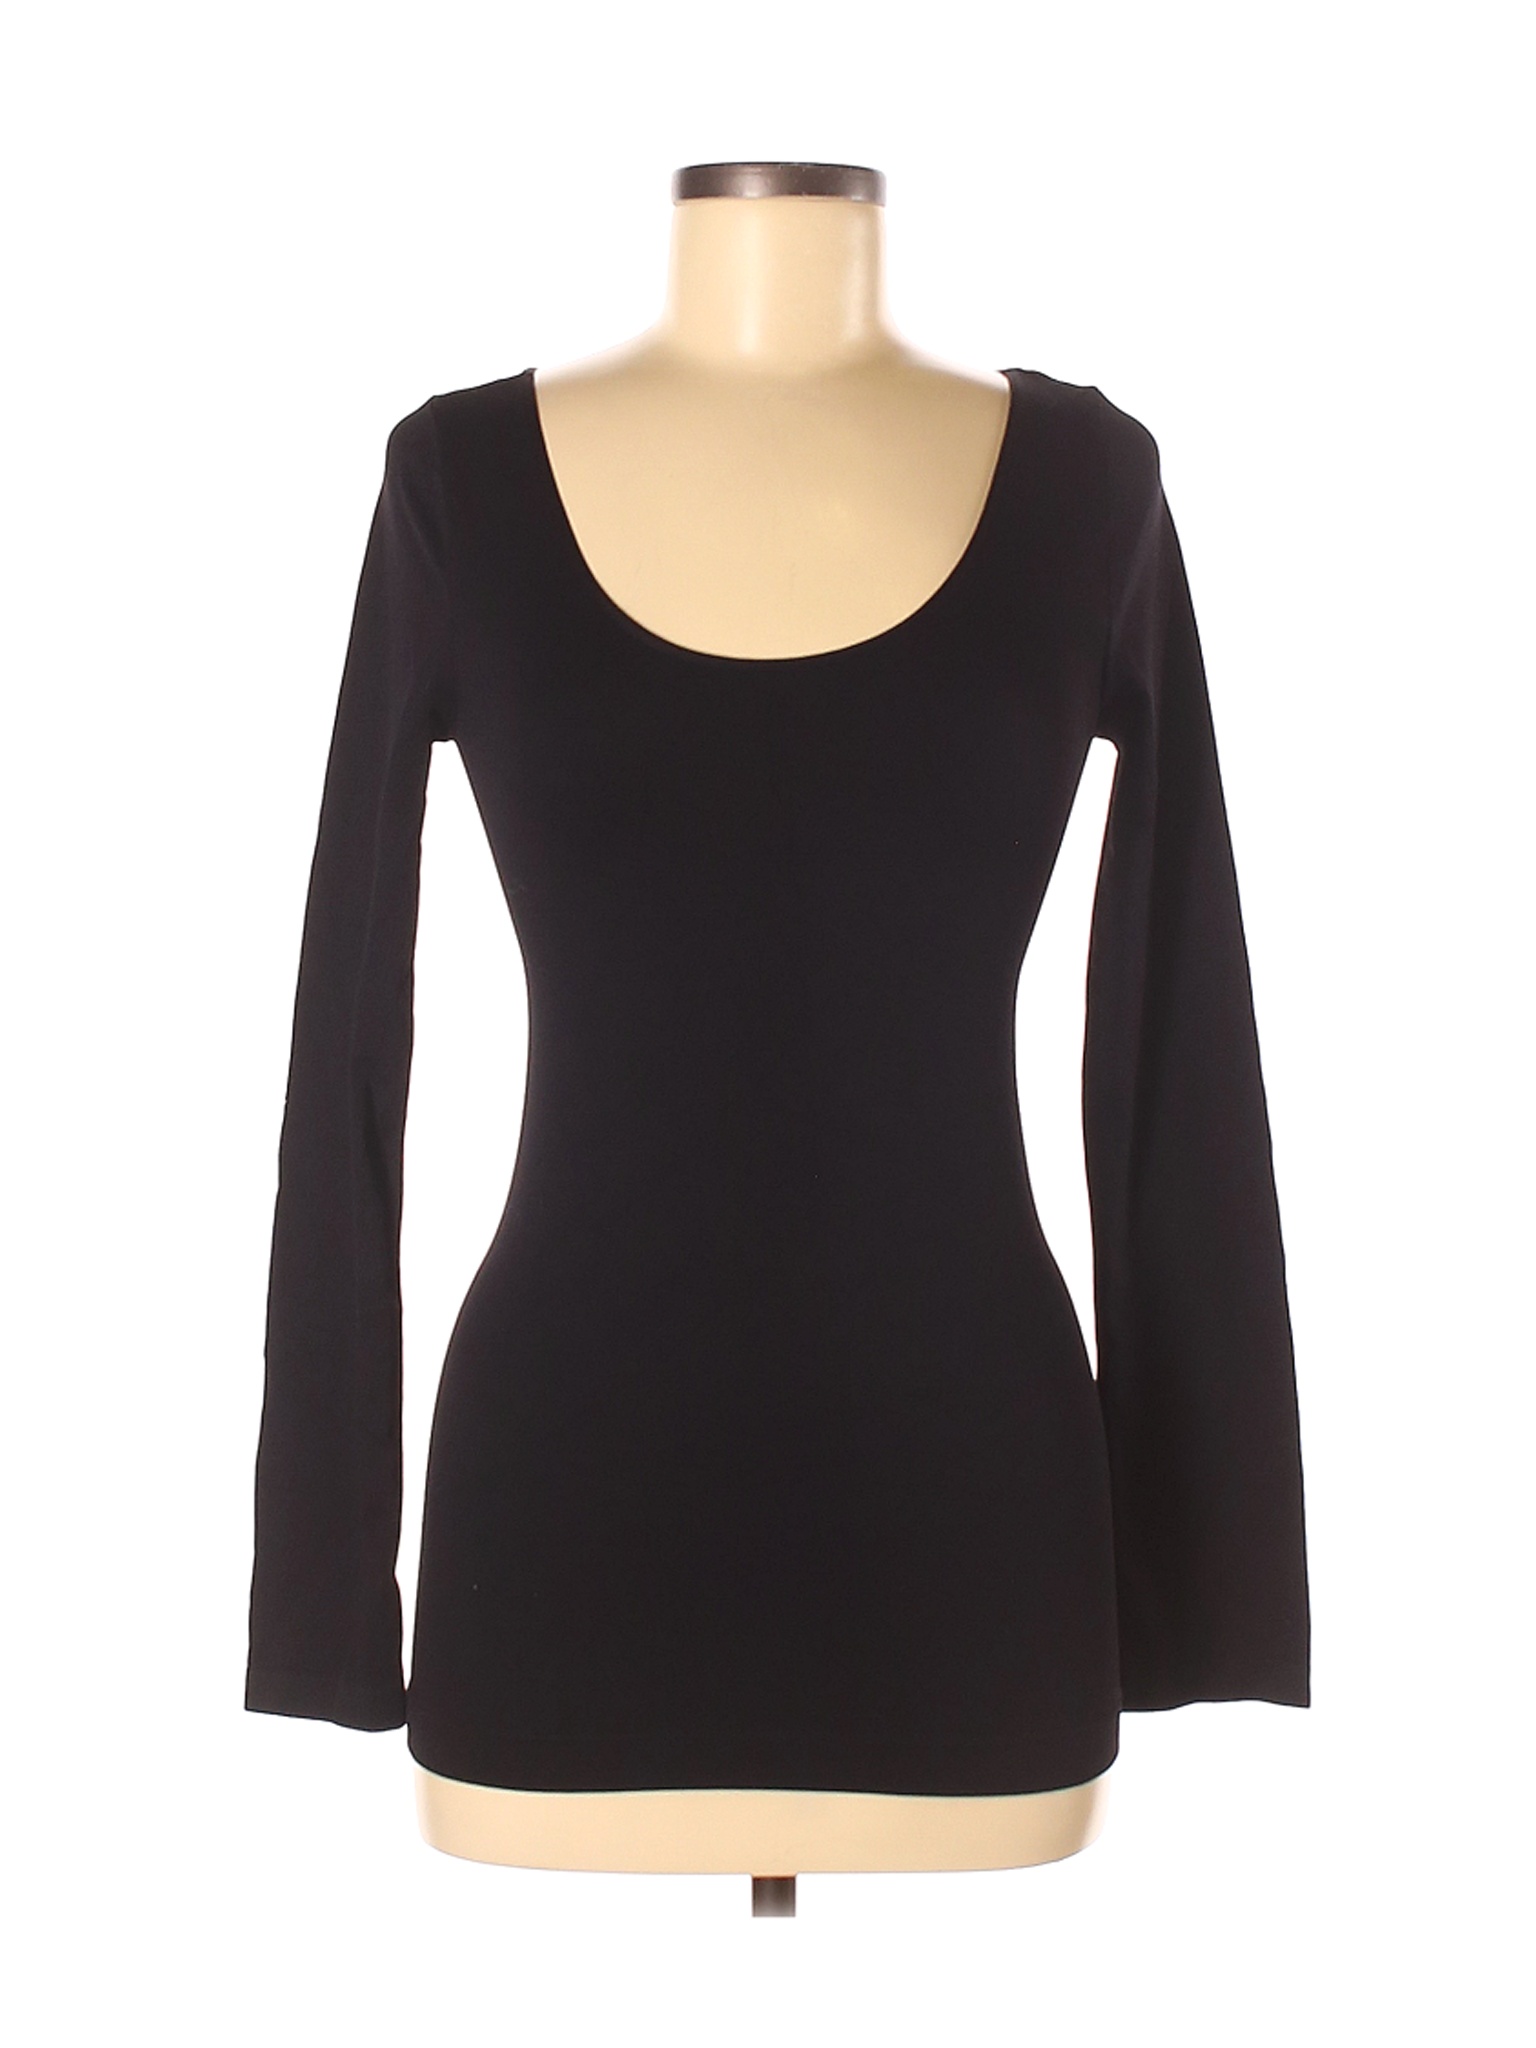 Skinny Tee Women Black Long Sleeve T-Shirt One Size | eBay